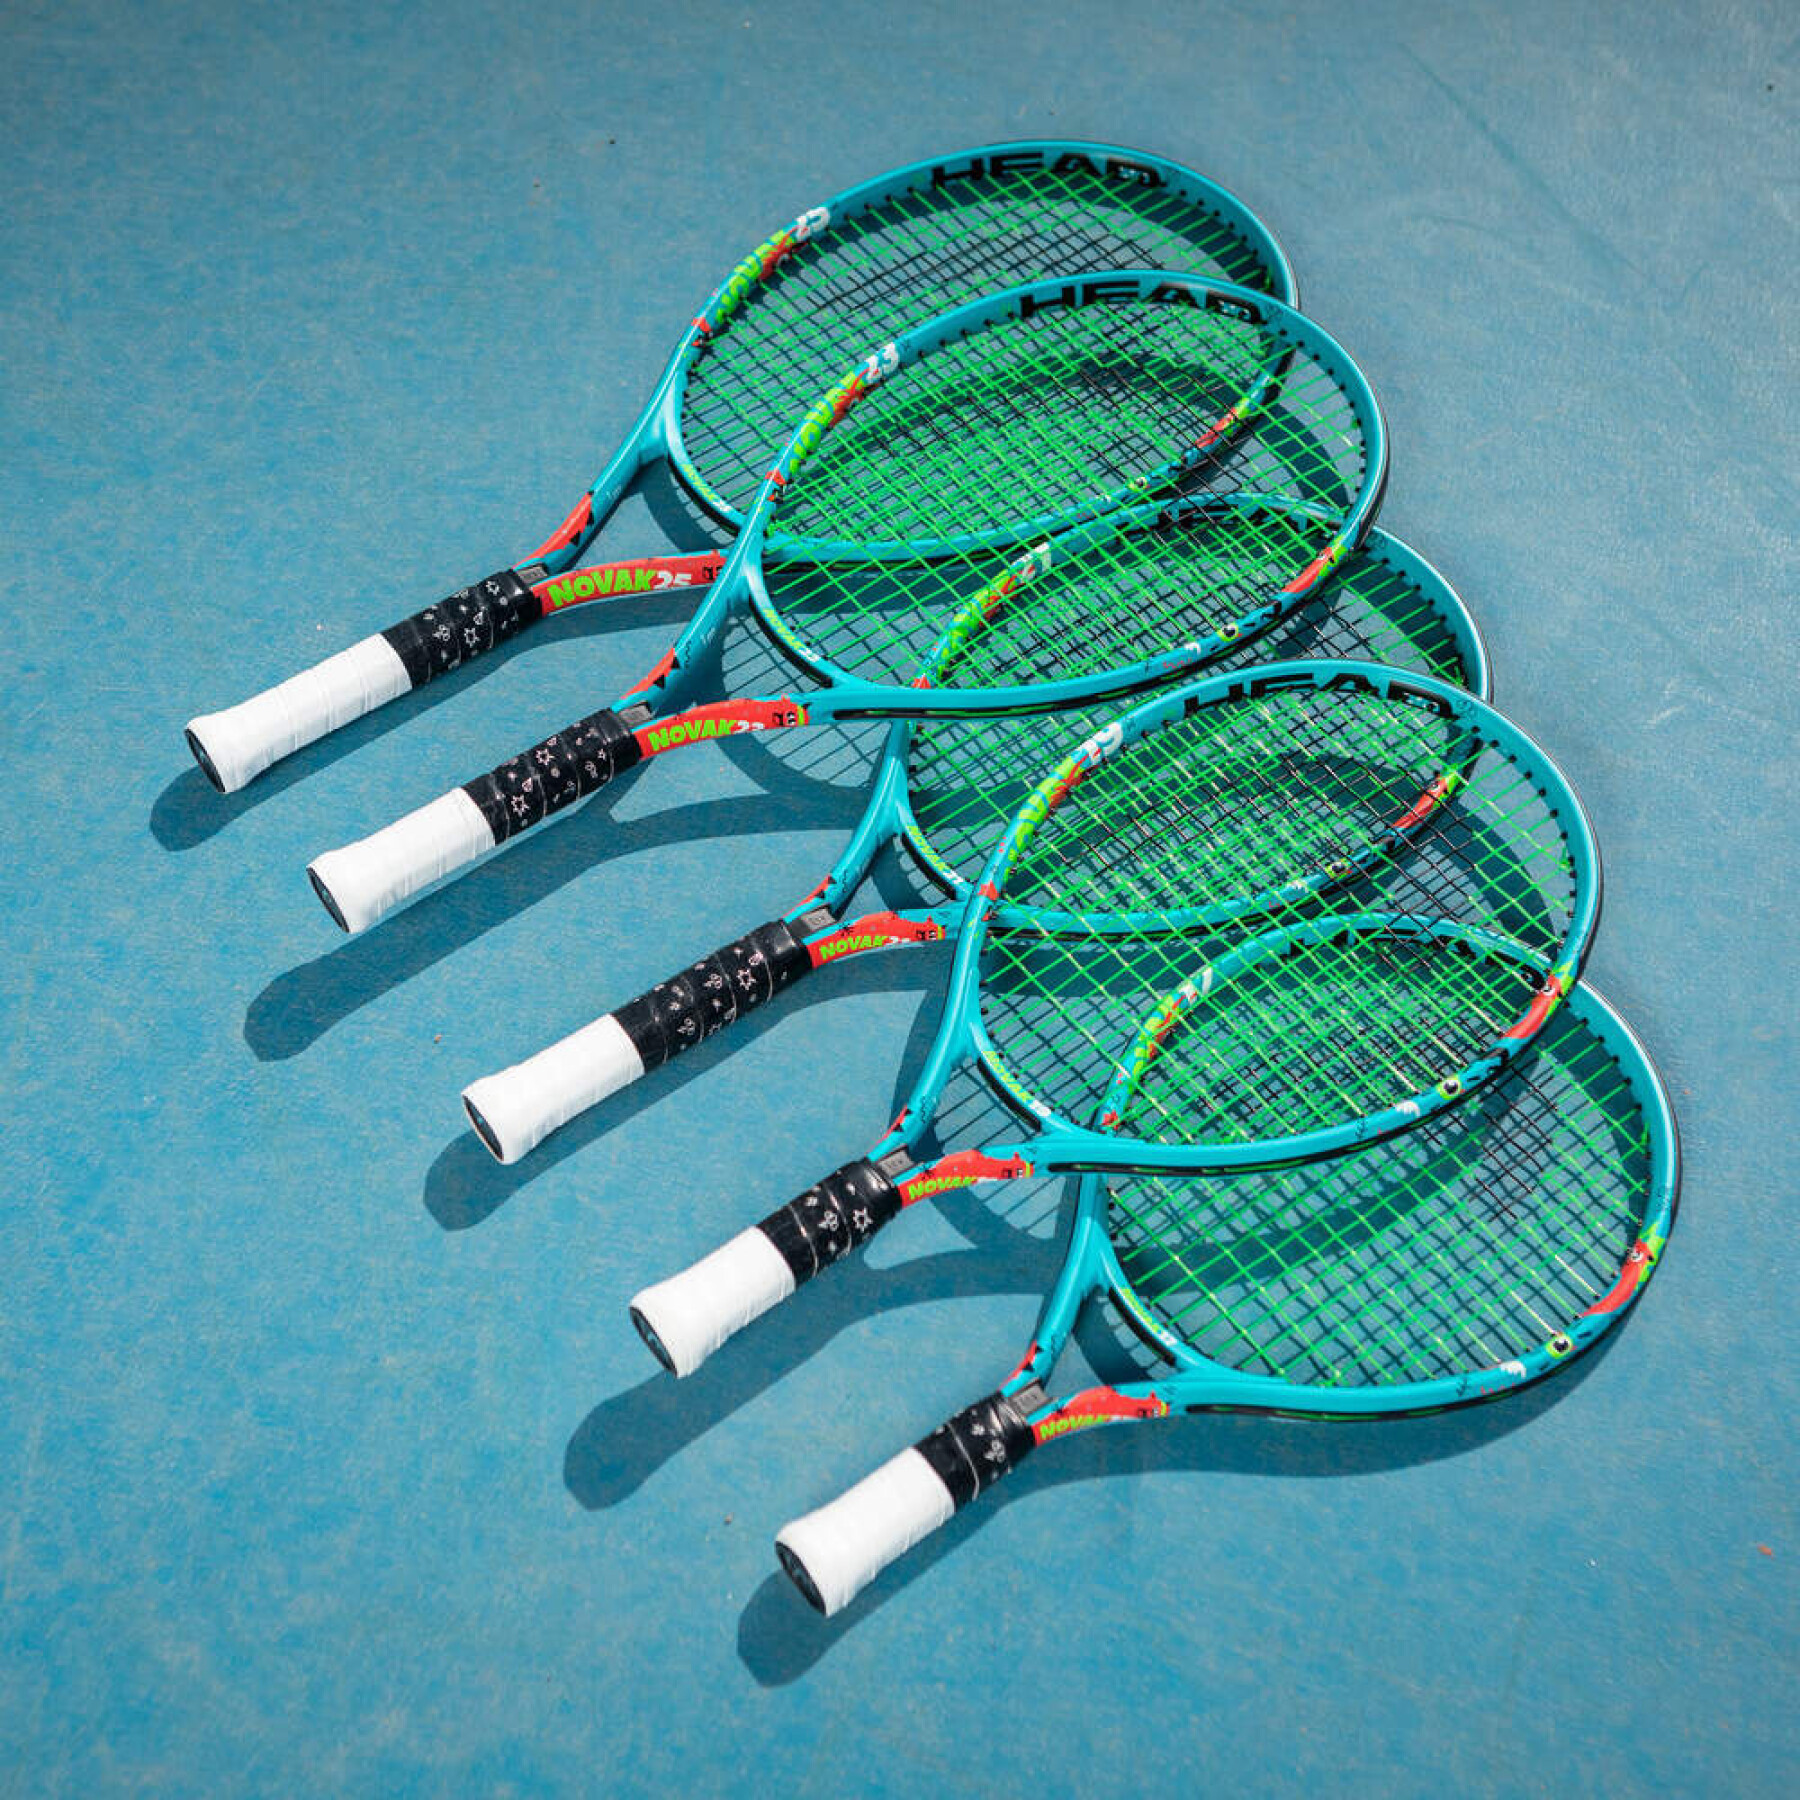 Tennis racket for kids Head Novak 19